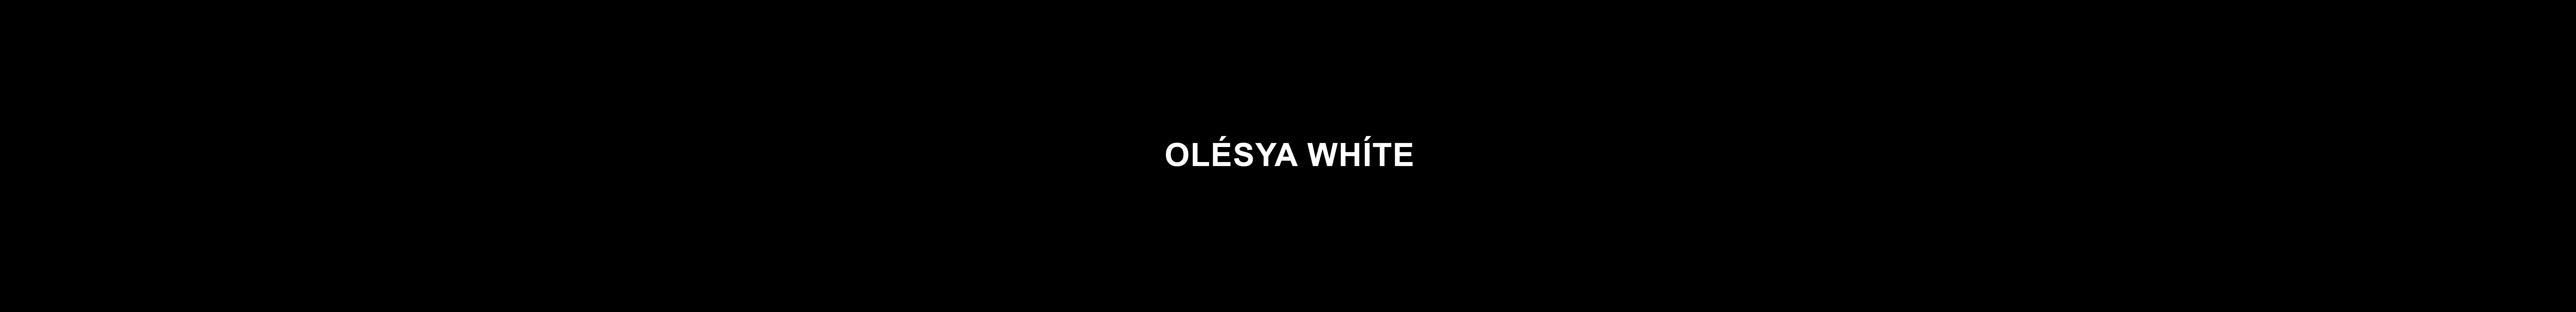 Olesya Whites profilbanner